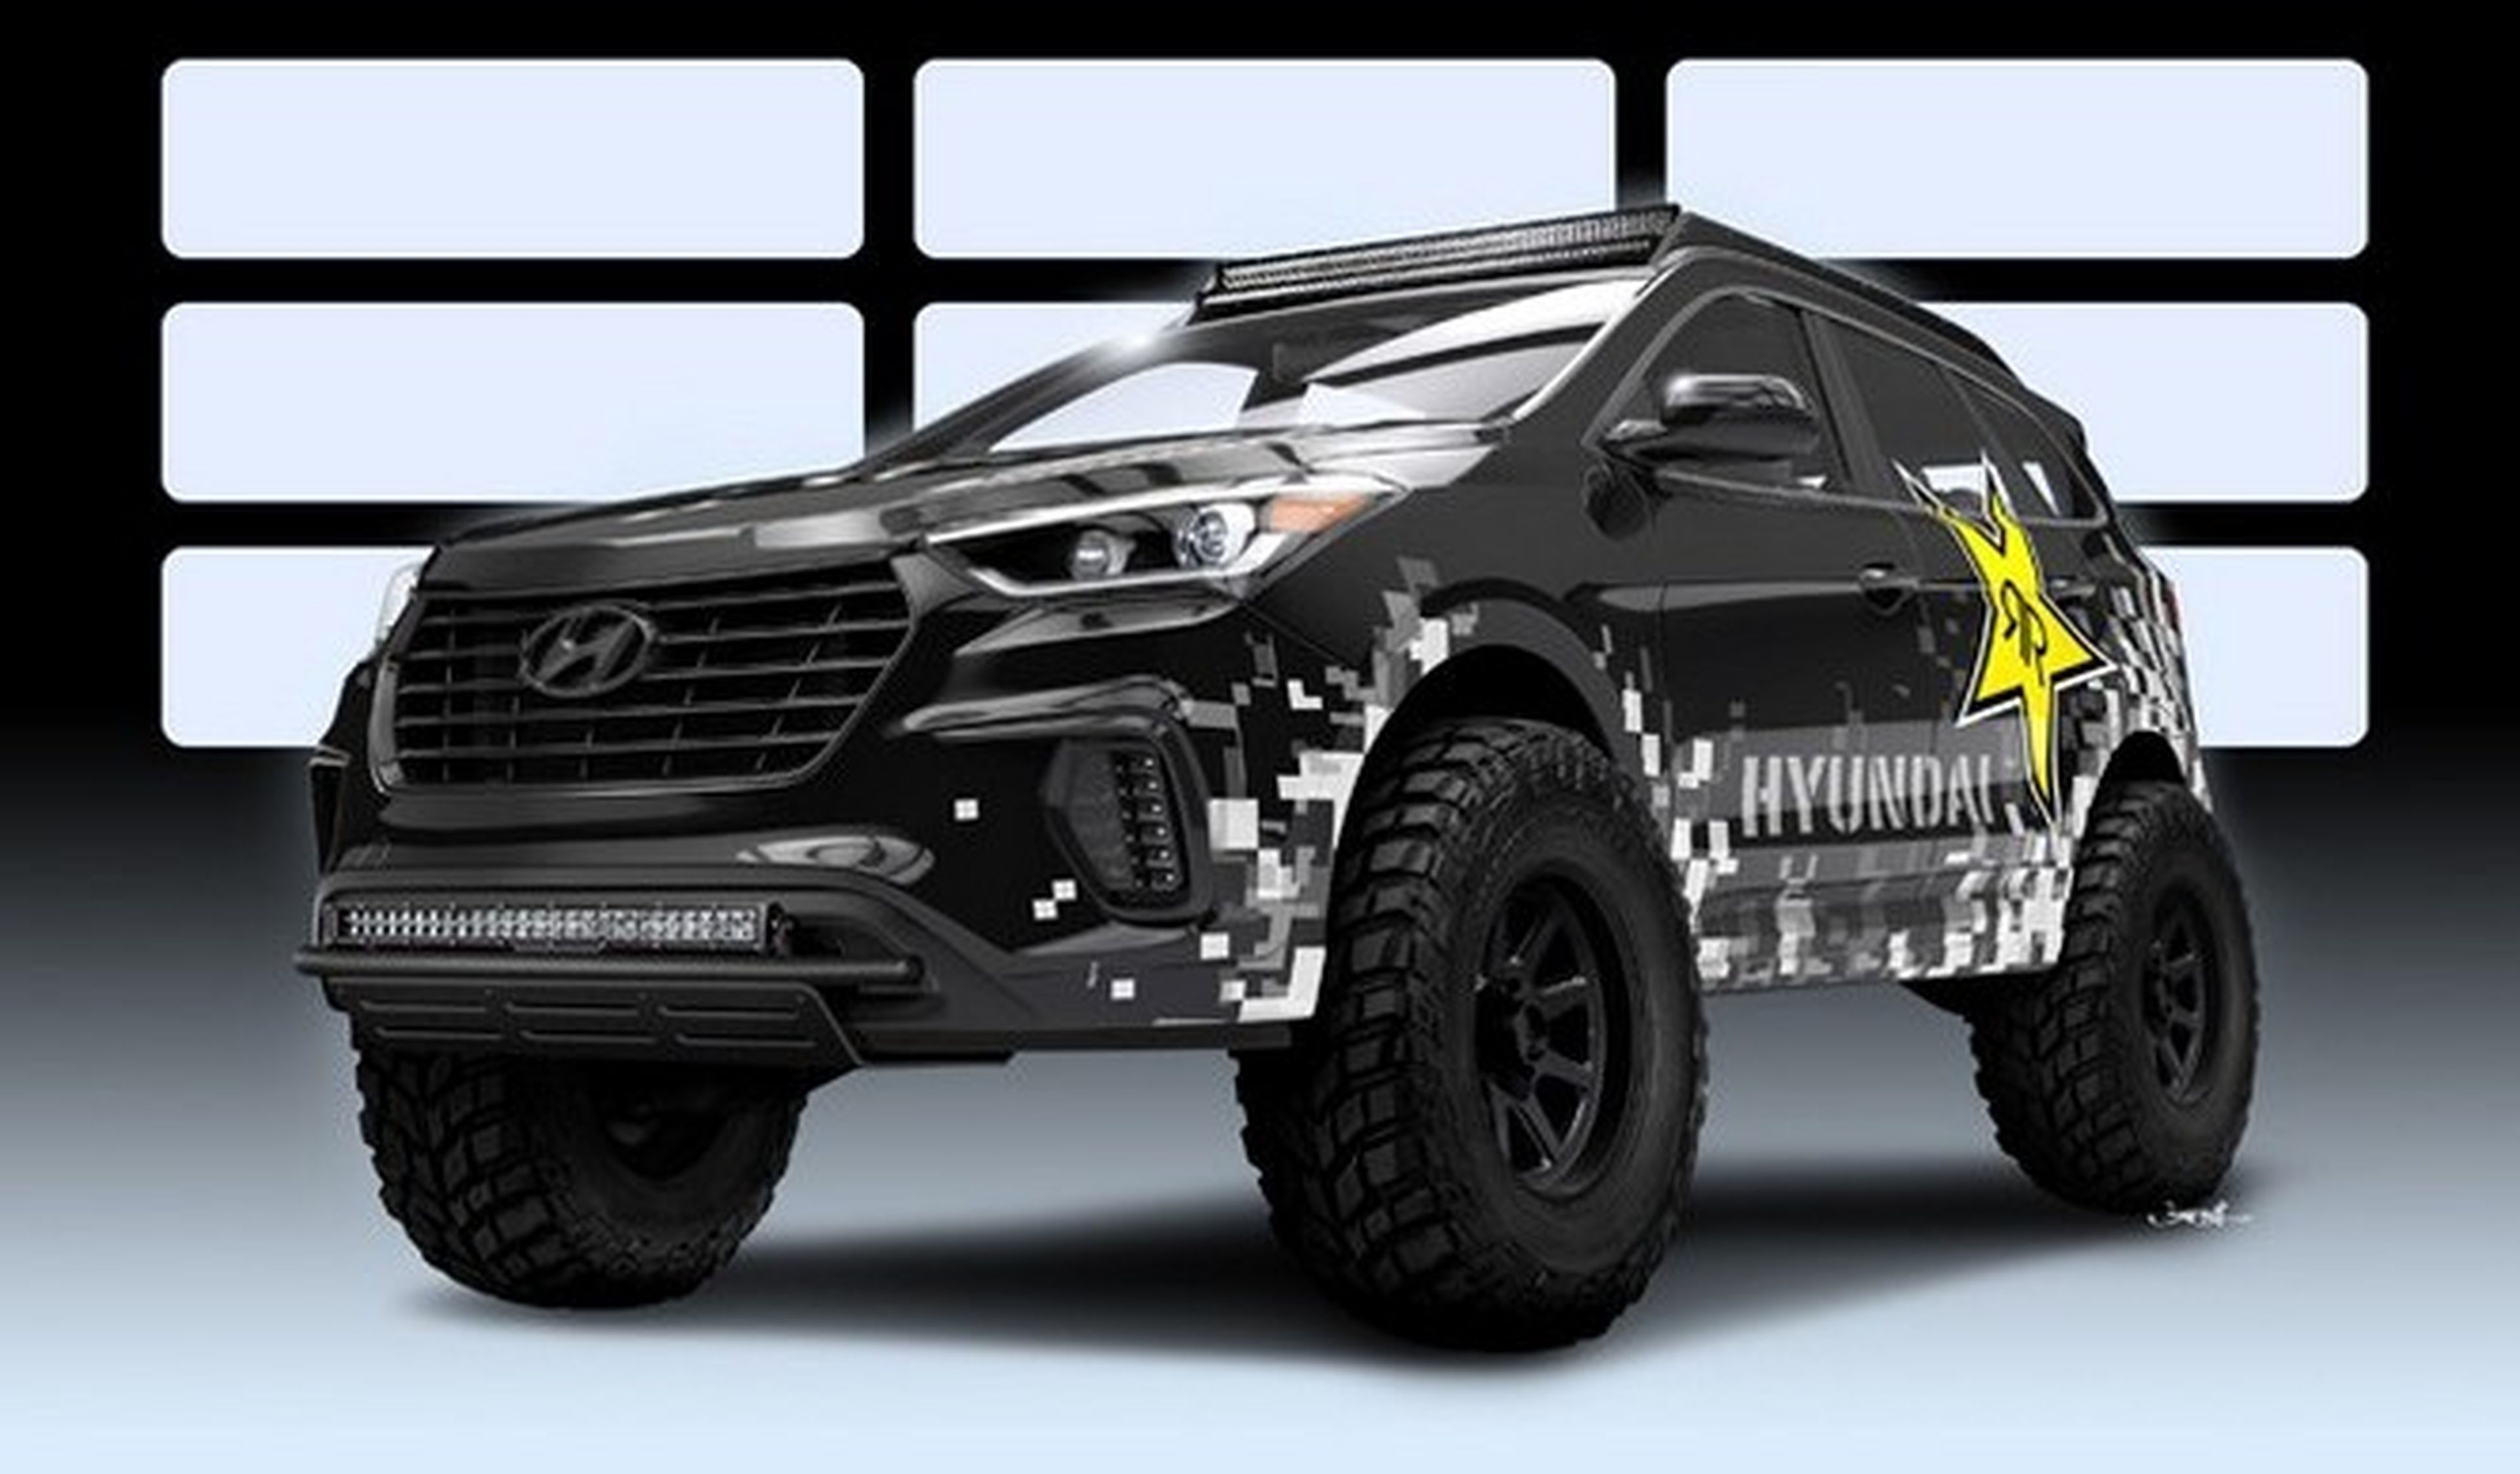 Rockstar Performance presenta este radical Hyundai Santa Fe